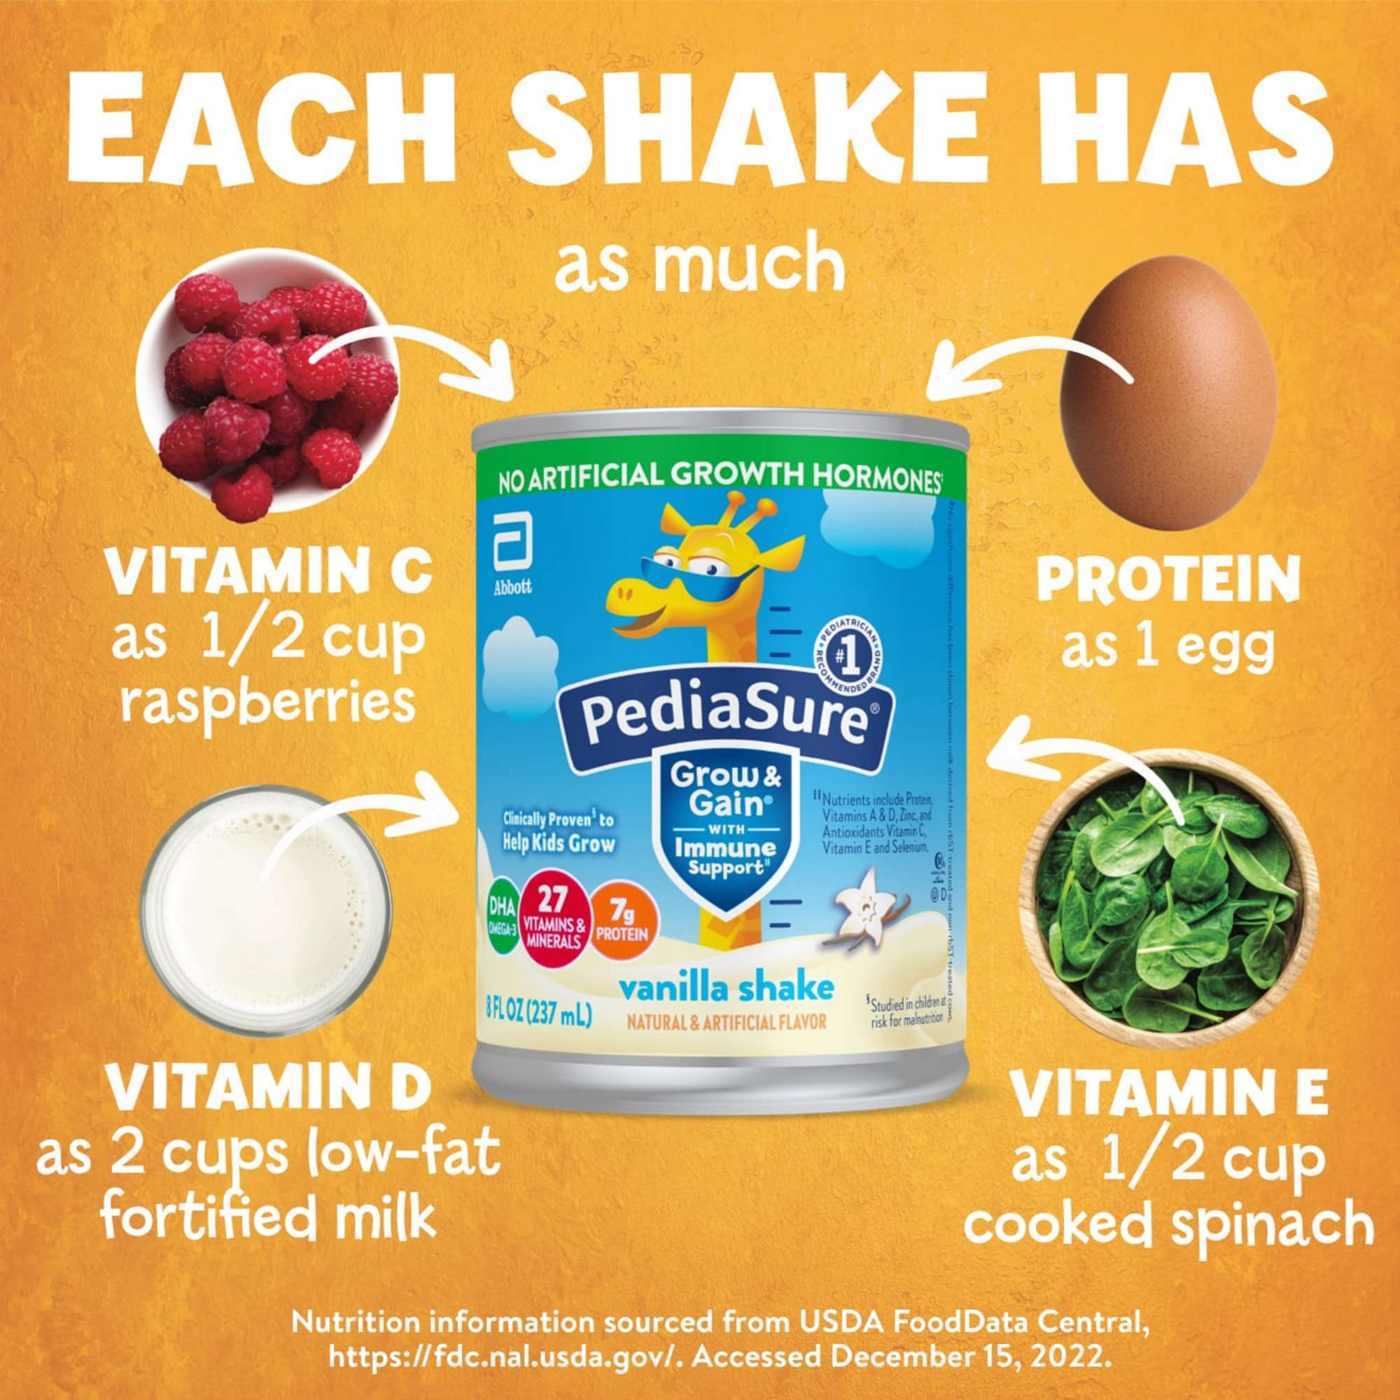 PediaSure Grow & Gain with Immune Support Nutritional Shake - Vanilla; image 8 of 11